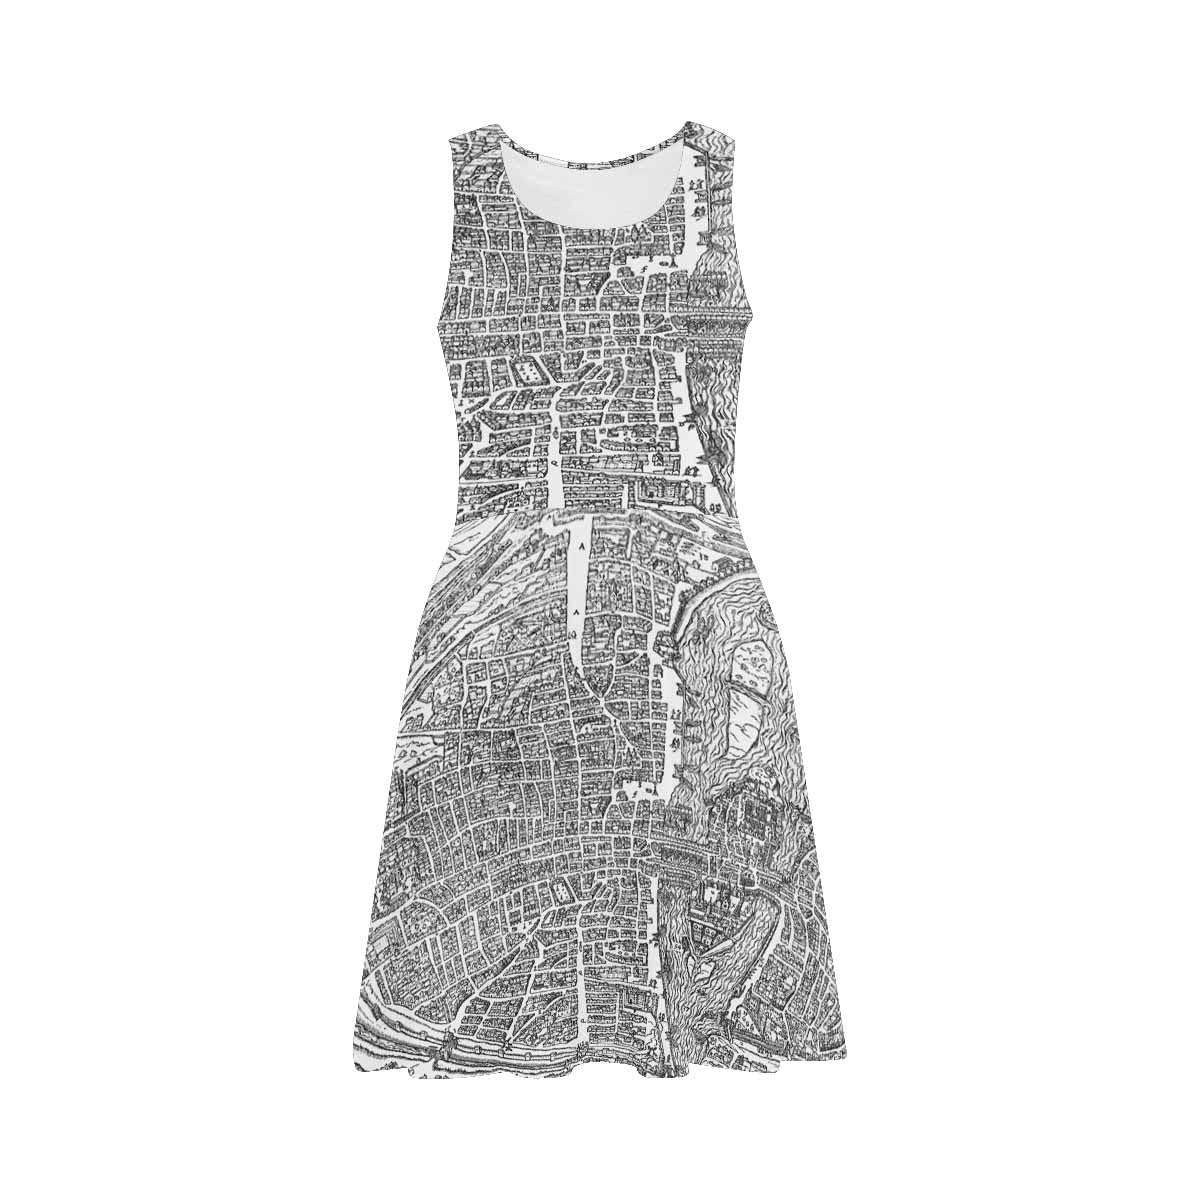 Antique Map casual summer dress, MODEL 09534, design 42